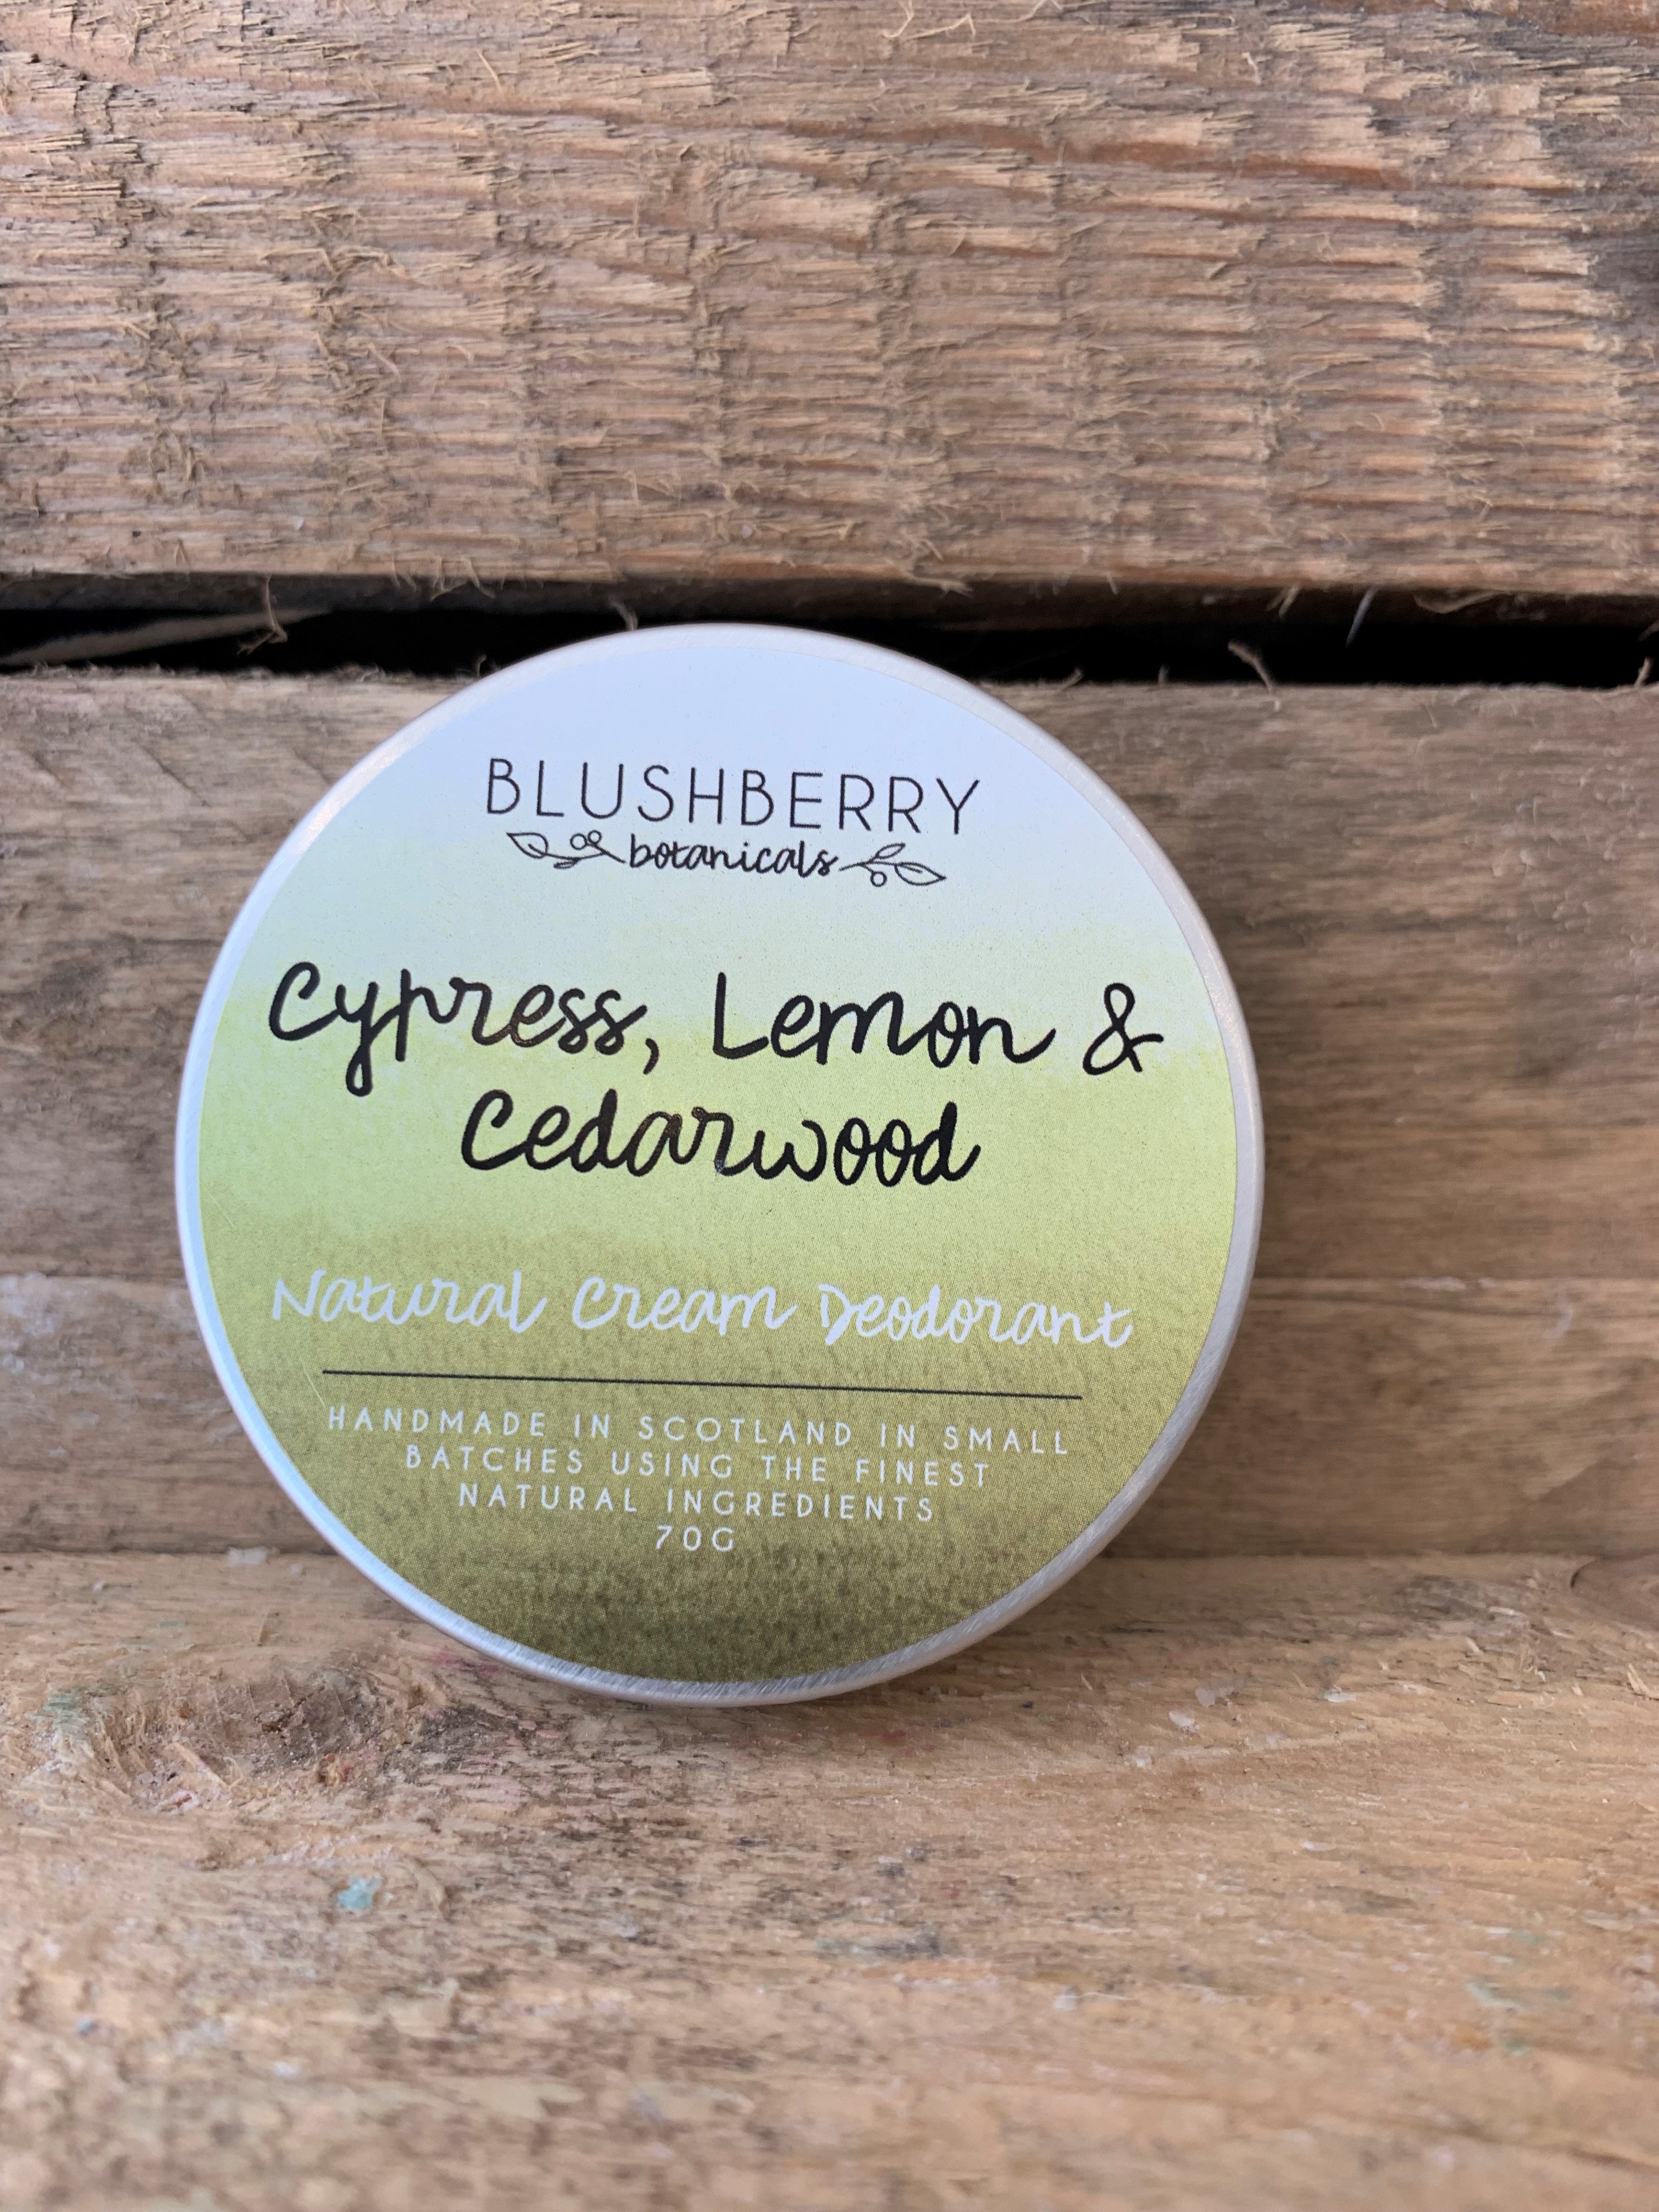 Cypress, Lemon and Cedarwood Blushberry Botanicals Natural Cream Deodorant